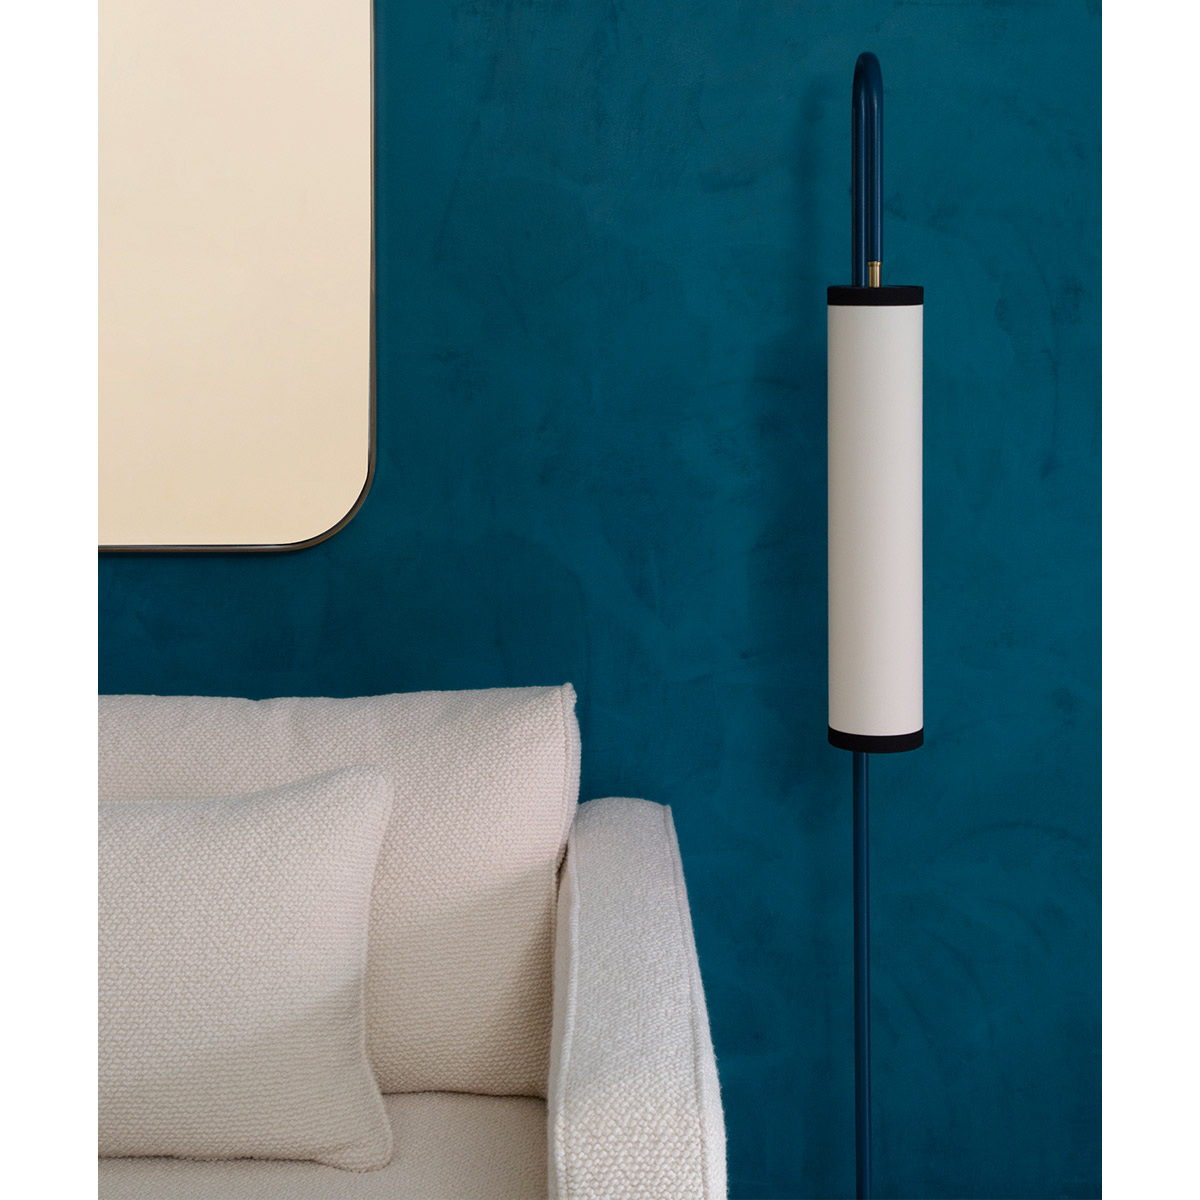 Floor Lamp Tokyo, Bleu Sarah - H141 cm - Steel / Cotton shade - image 3